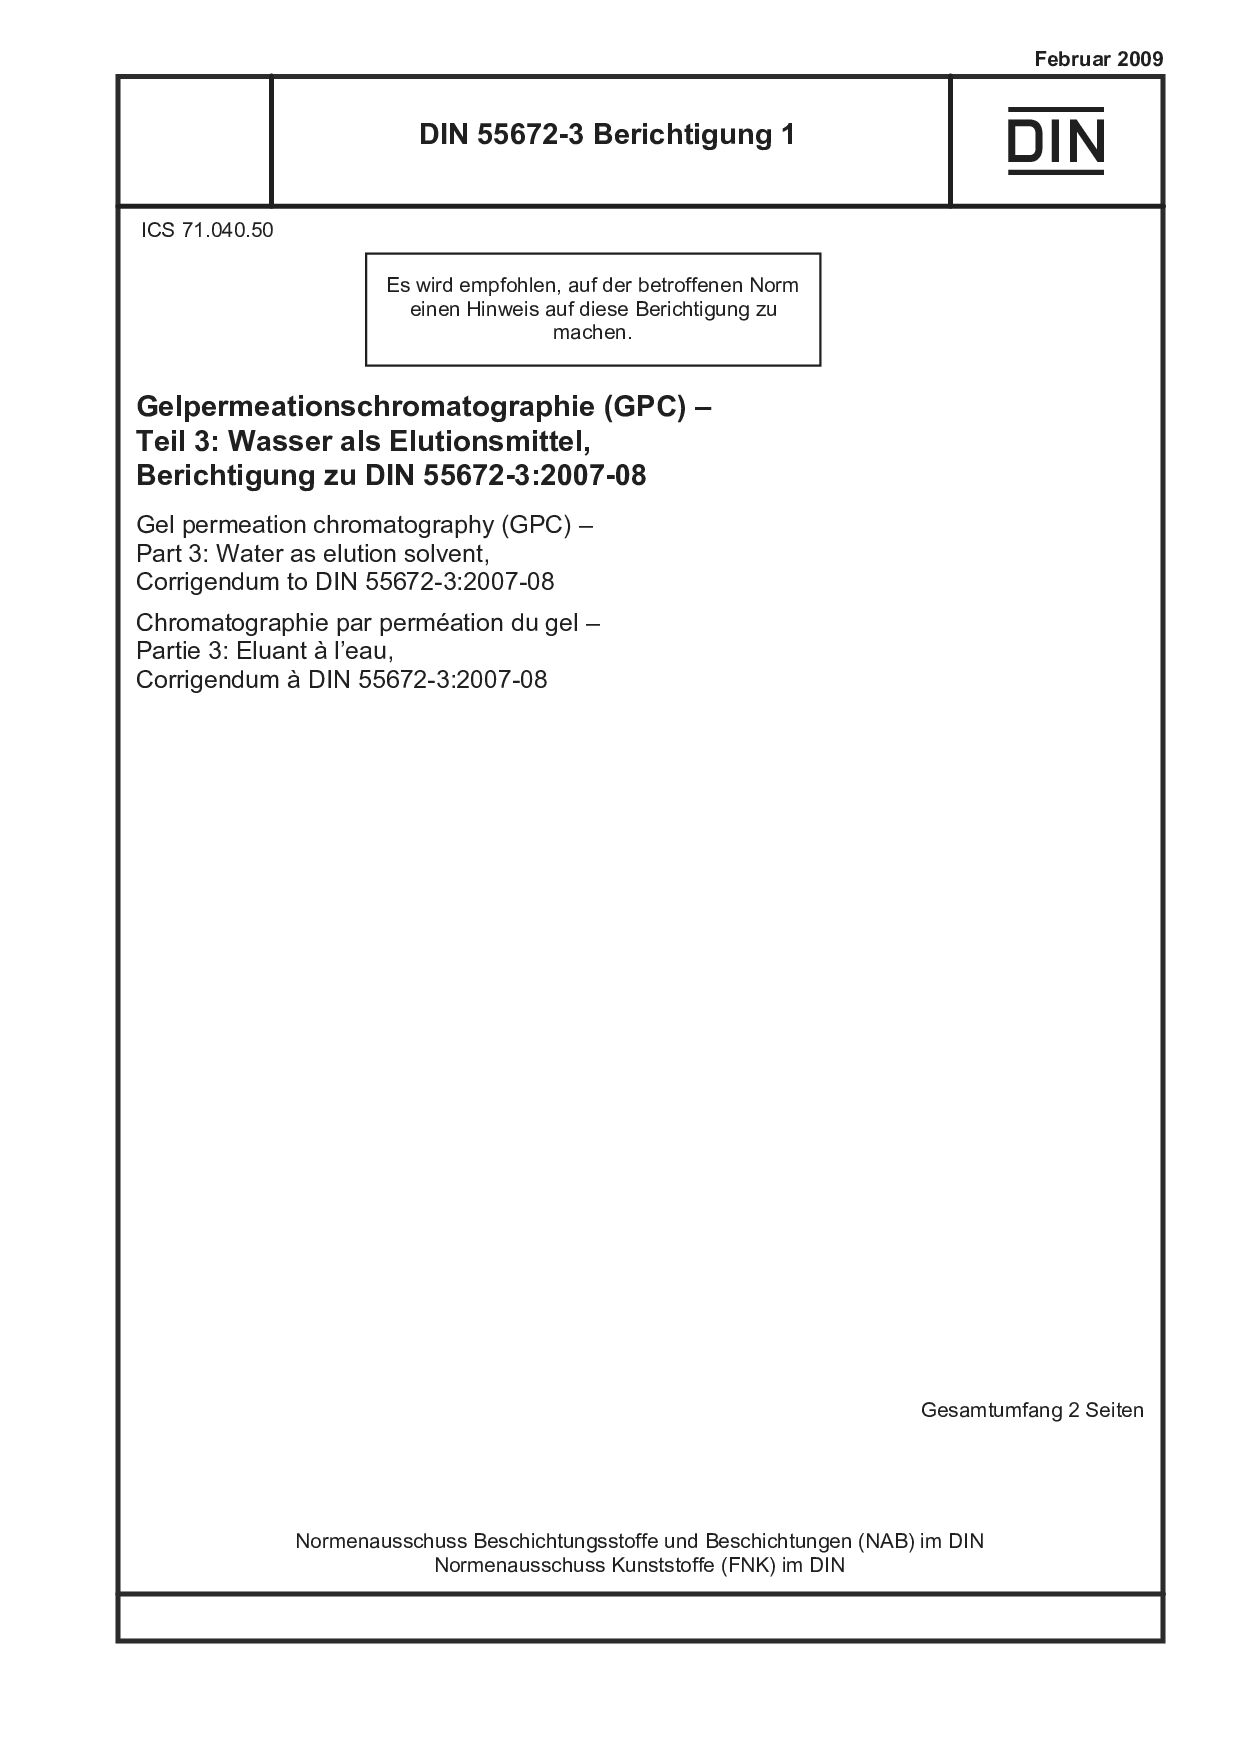 DIN 55672-3 Berichtigung 1:2009封面图